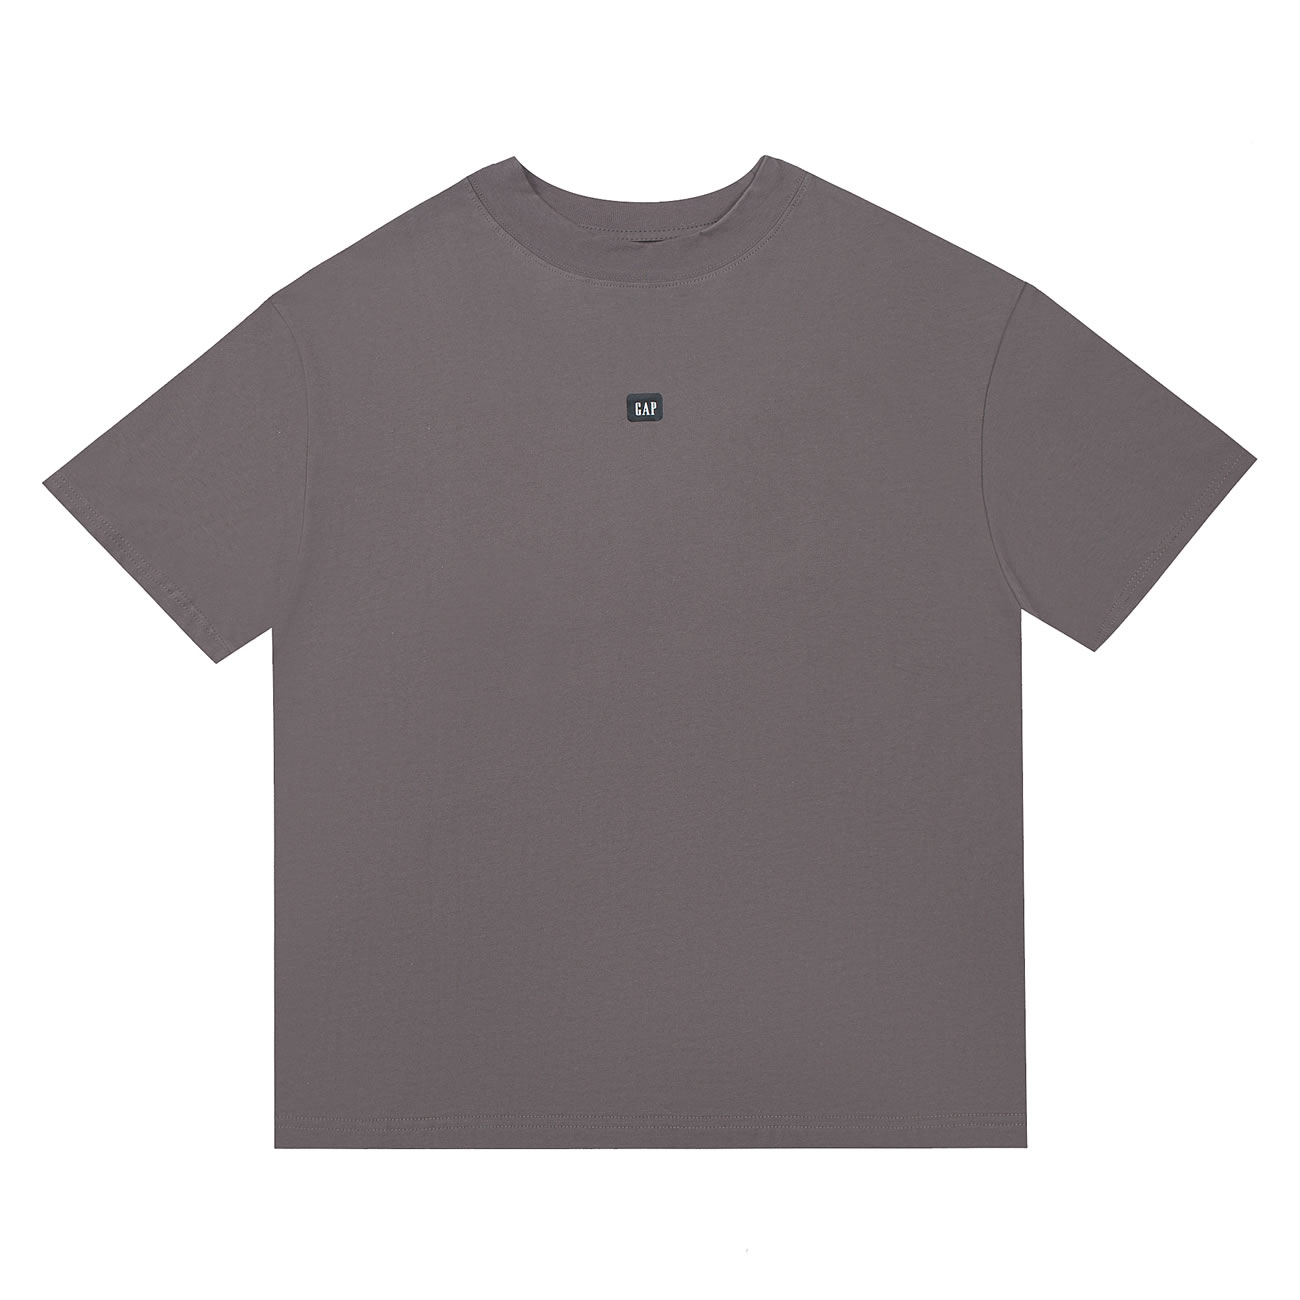 Kanye New T Shirts For Sale Grey (1) - newkick.org